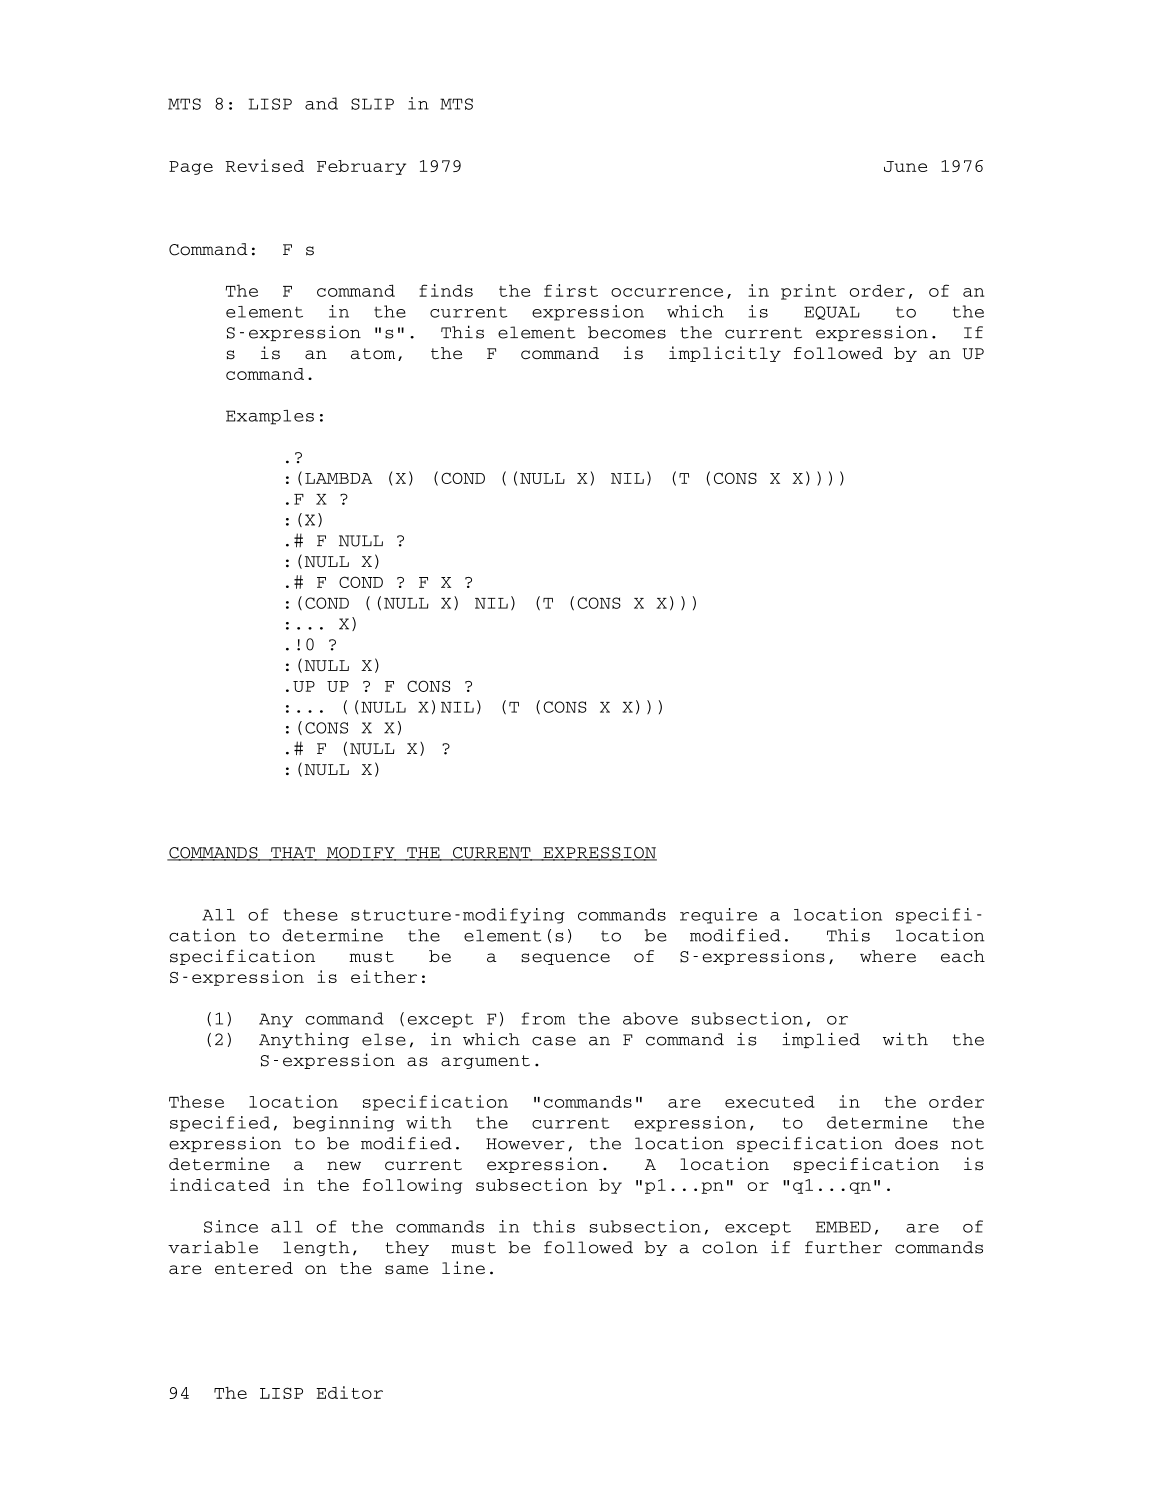 MTS Volume 8 - LISP and SLIP page 94